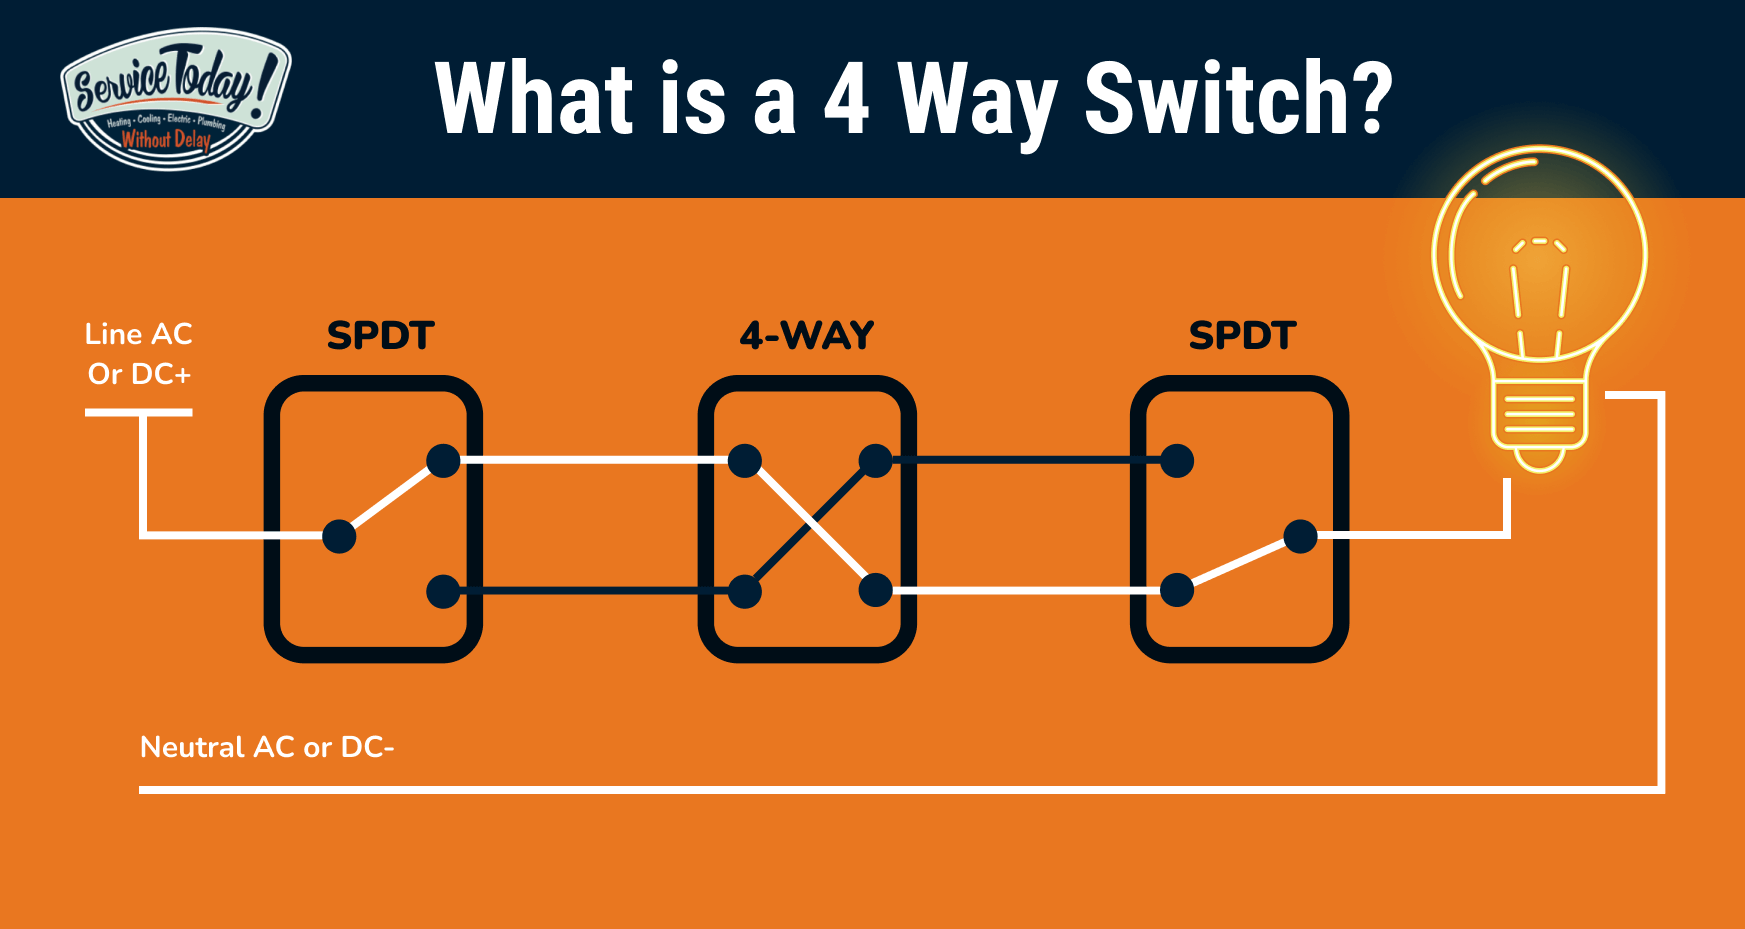 Groseramente Deflector Descriptivo What Is a 4 Way Switch? - ServiceToday! 24/7